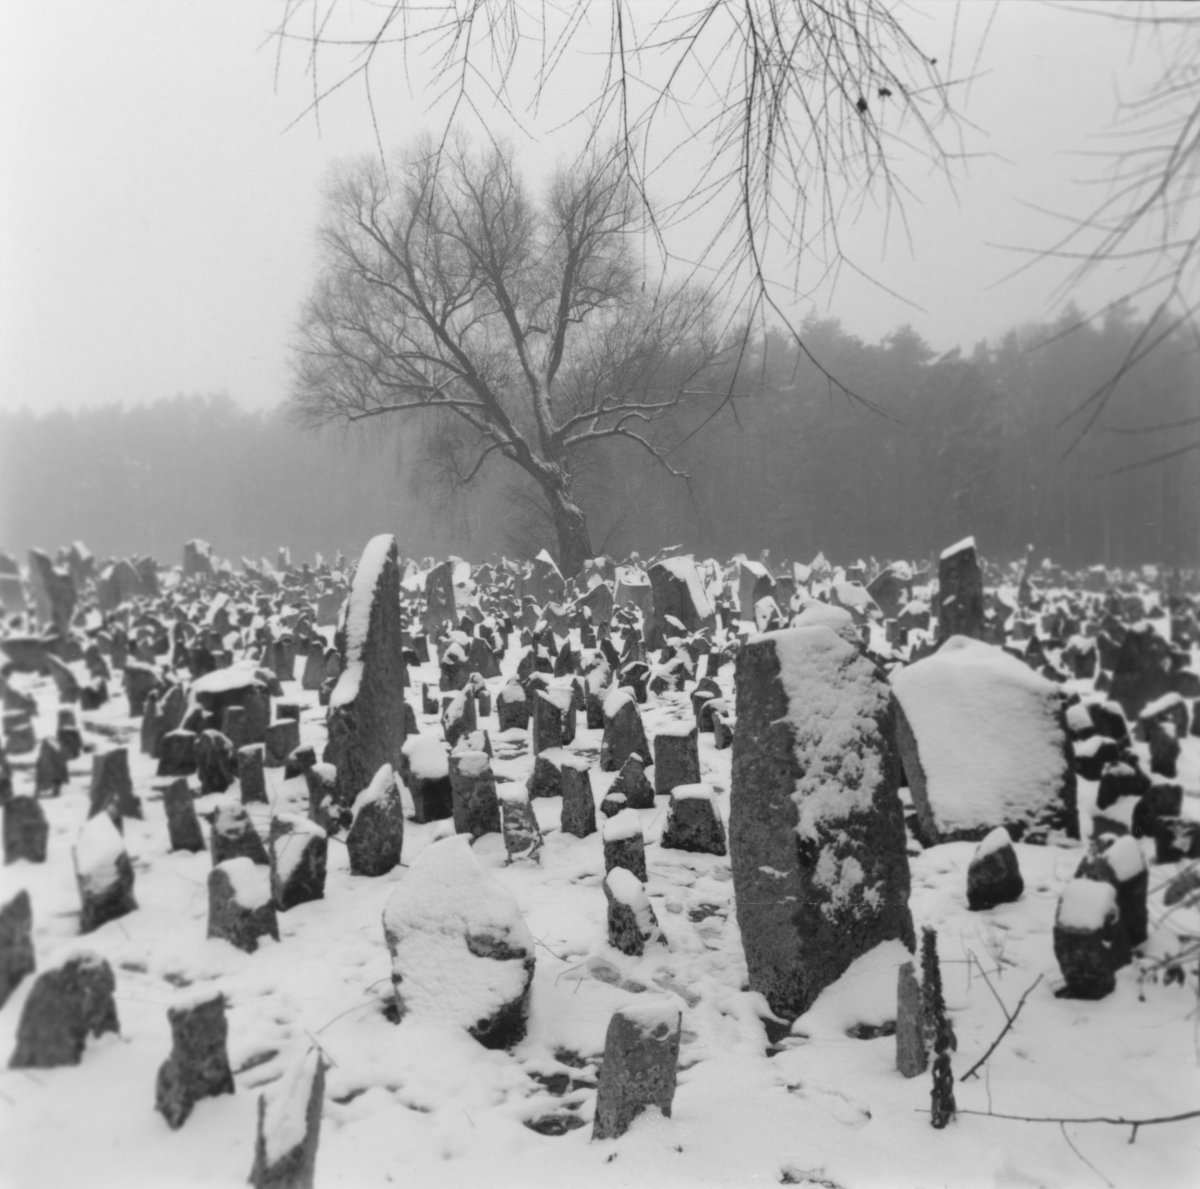 The Treblinka Death Camp